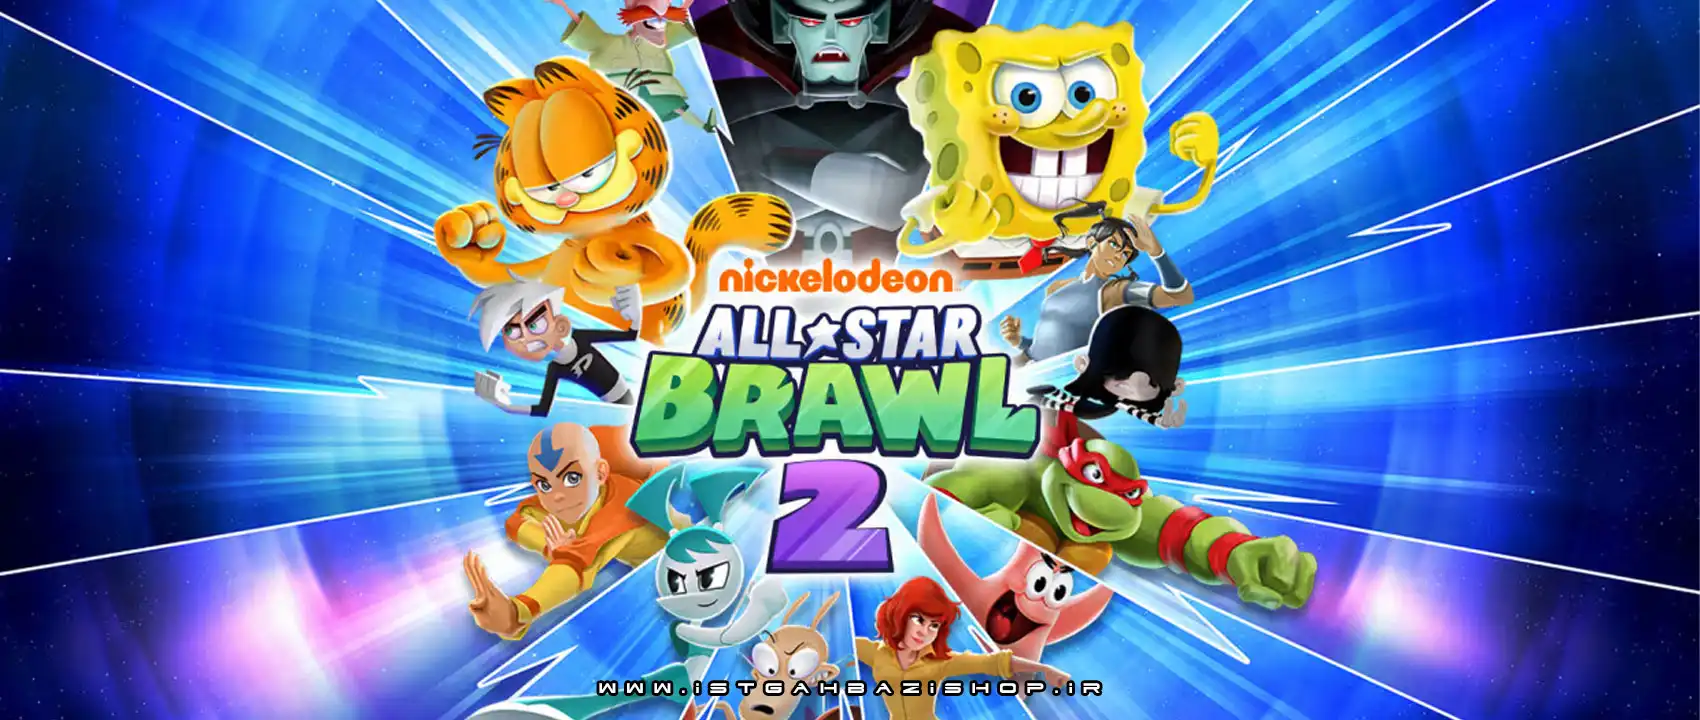 Nickelodeon All Star Brawl 2 Ps4